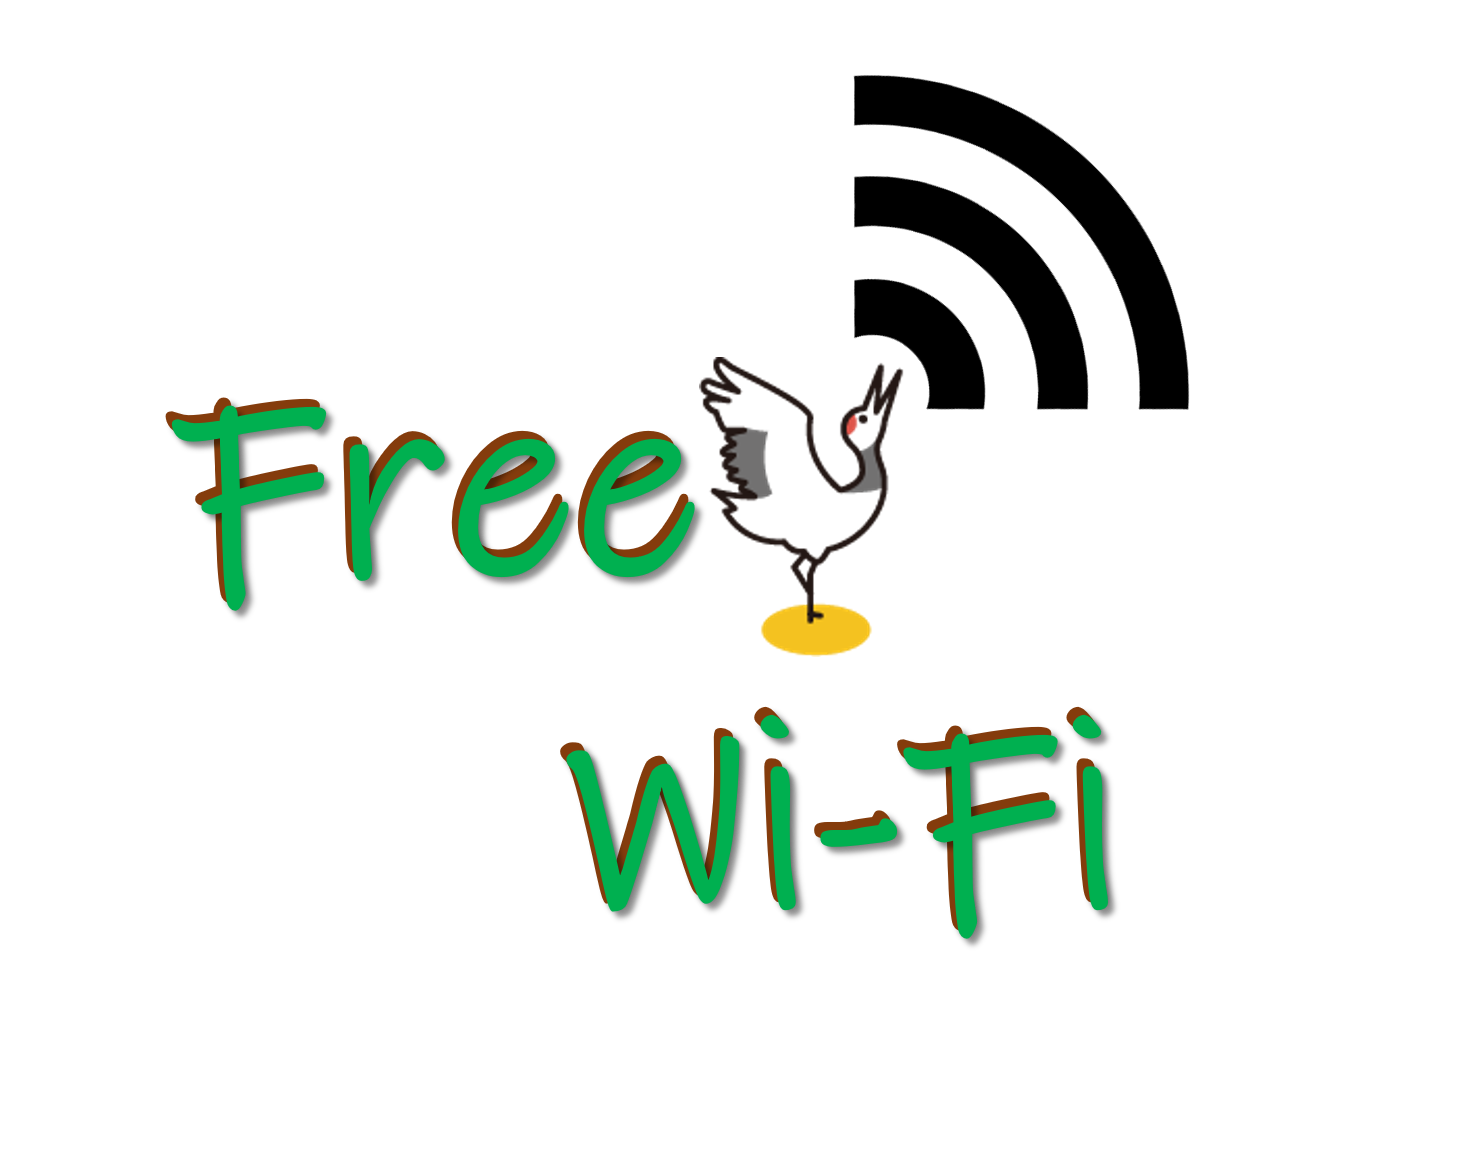 Free Wi-Fi 始めました！